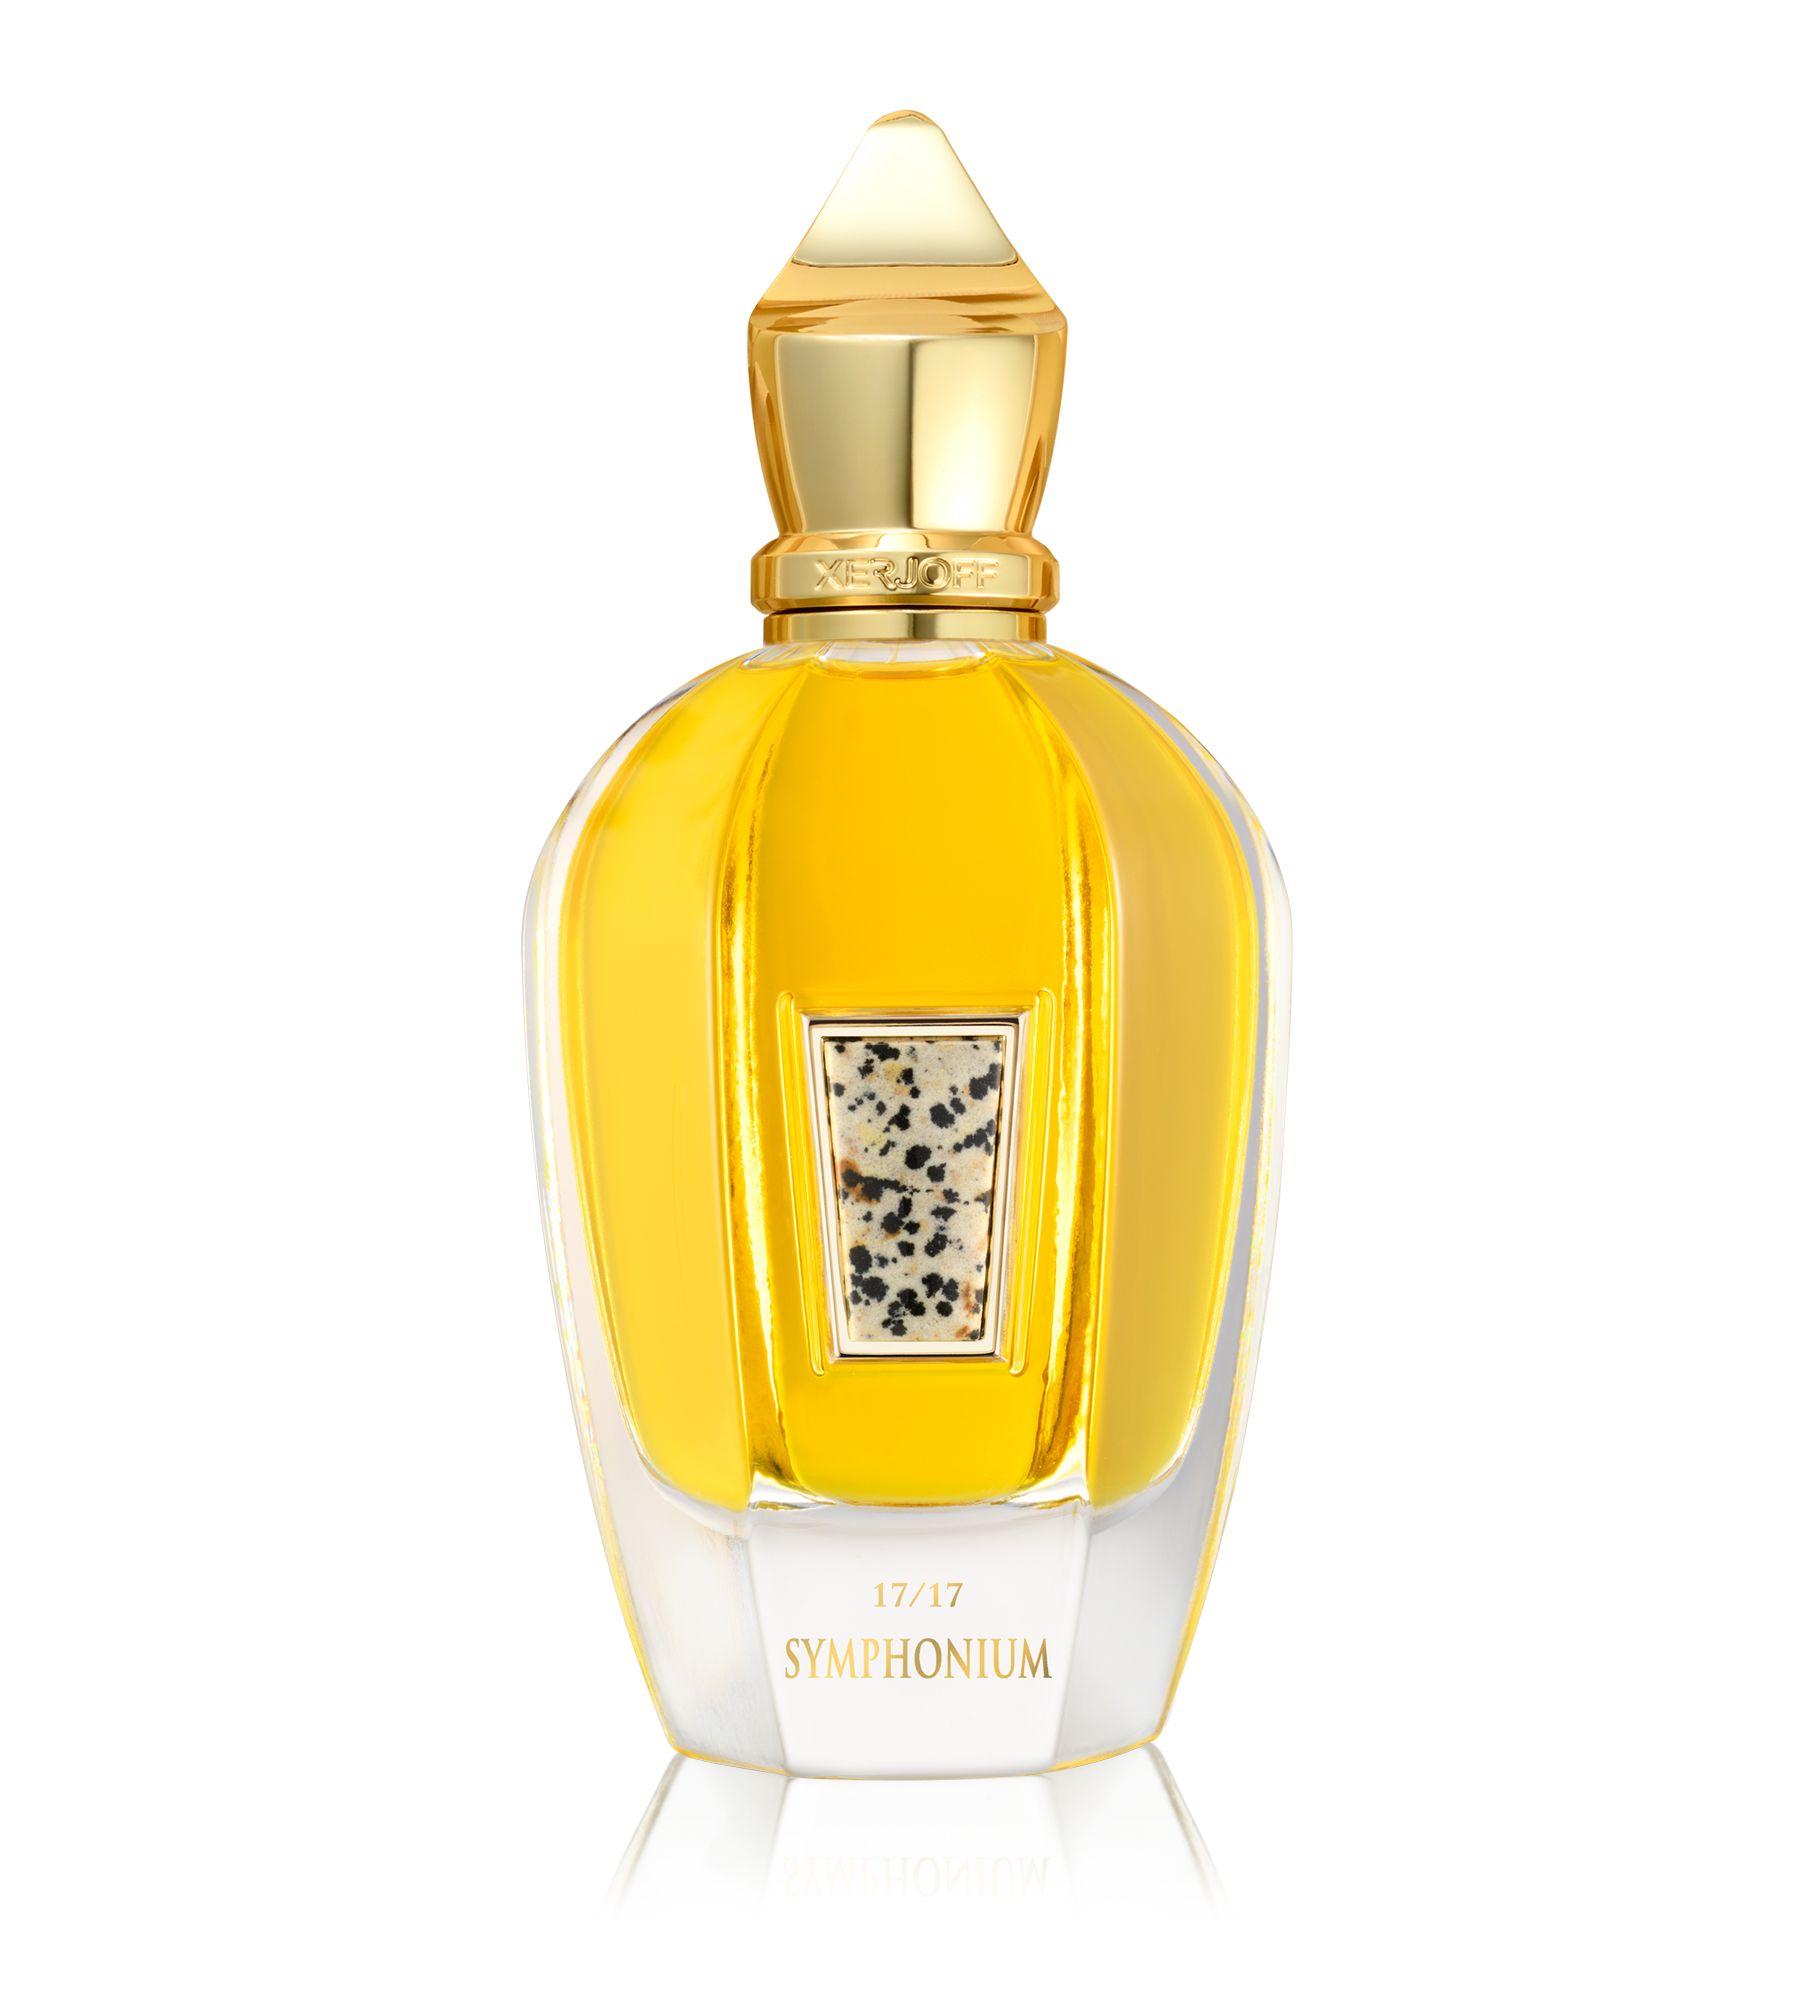 Symphonium Parfum Xerjoff perfume - a new fragrance for women and men 2021